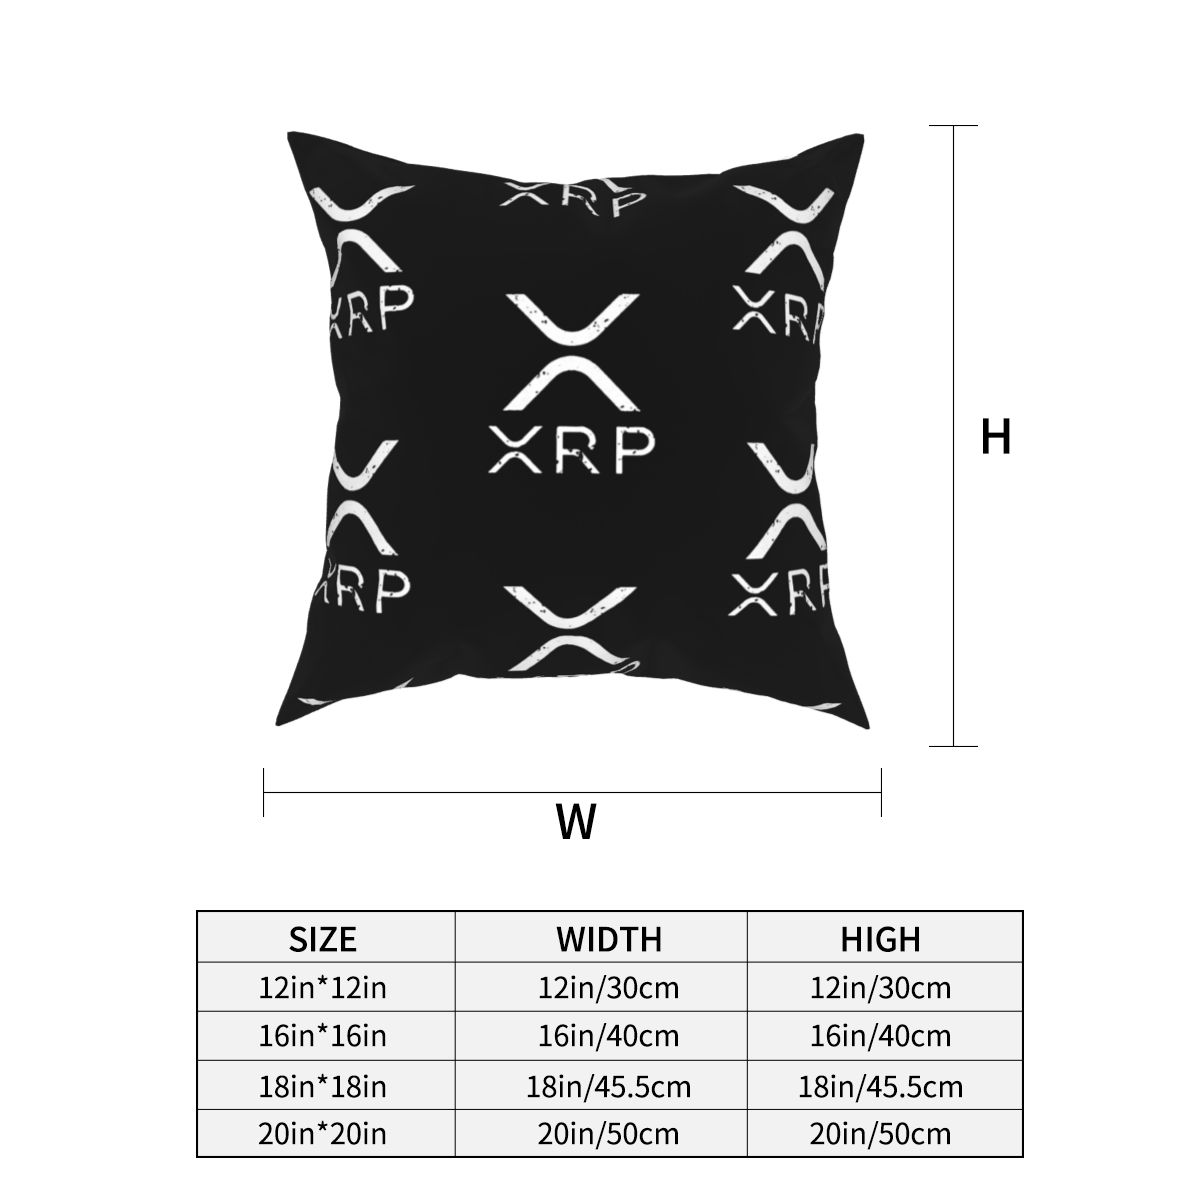 XRP Ripple pillowcase